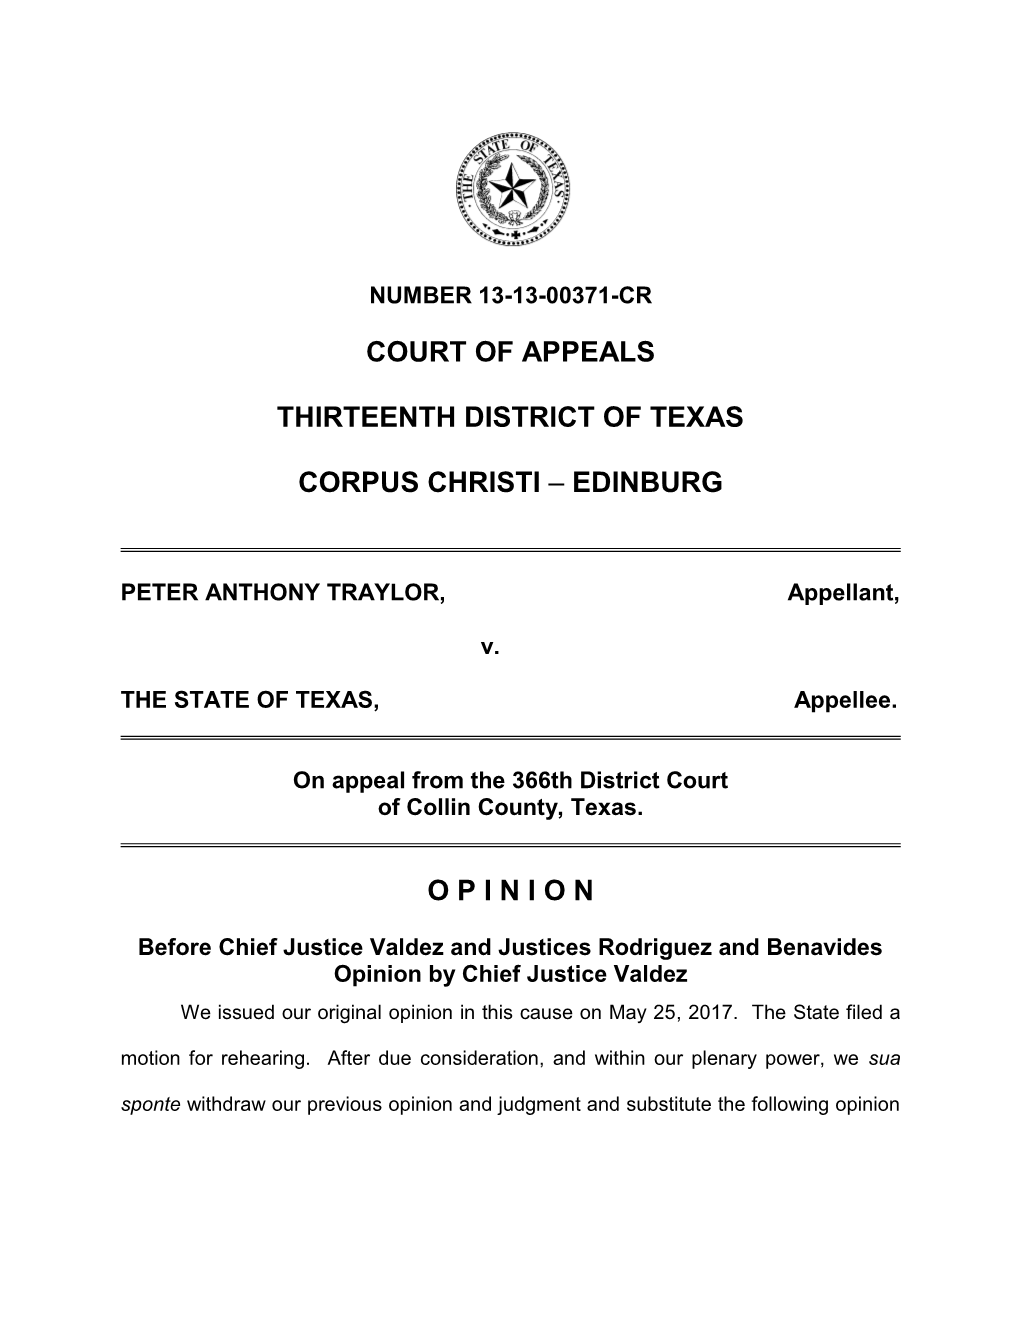 Court of Appeals Thirteenth District of Texas Corpus Christi – Edinburg